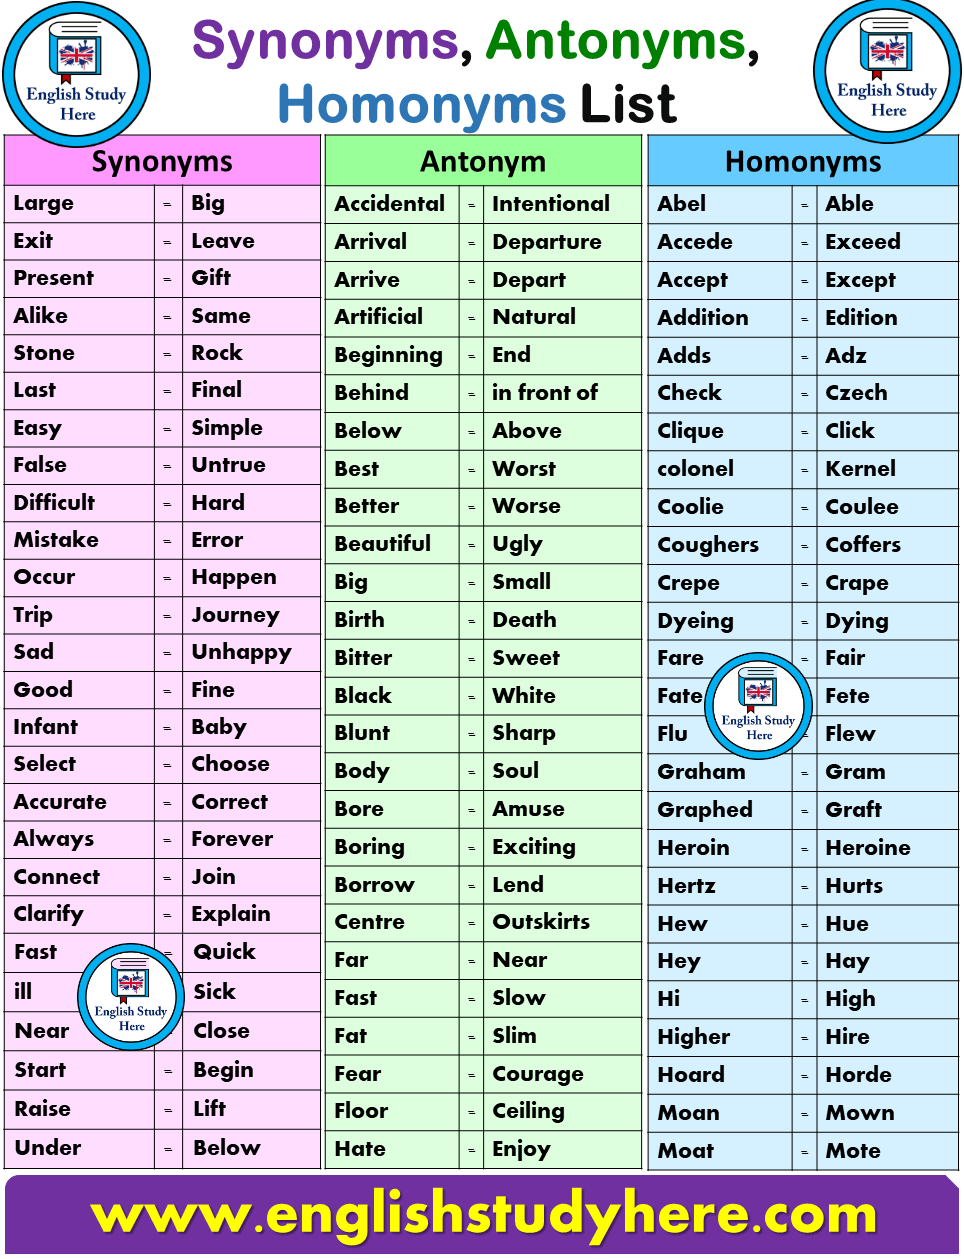 Synonyms, Antonyms and Homonyms List